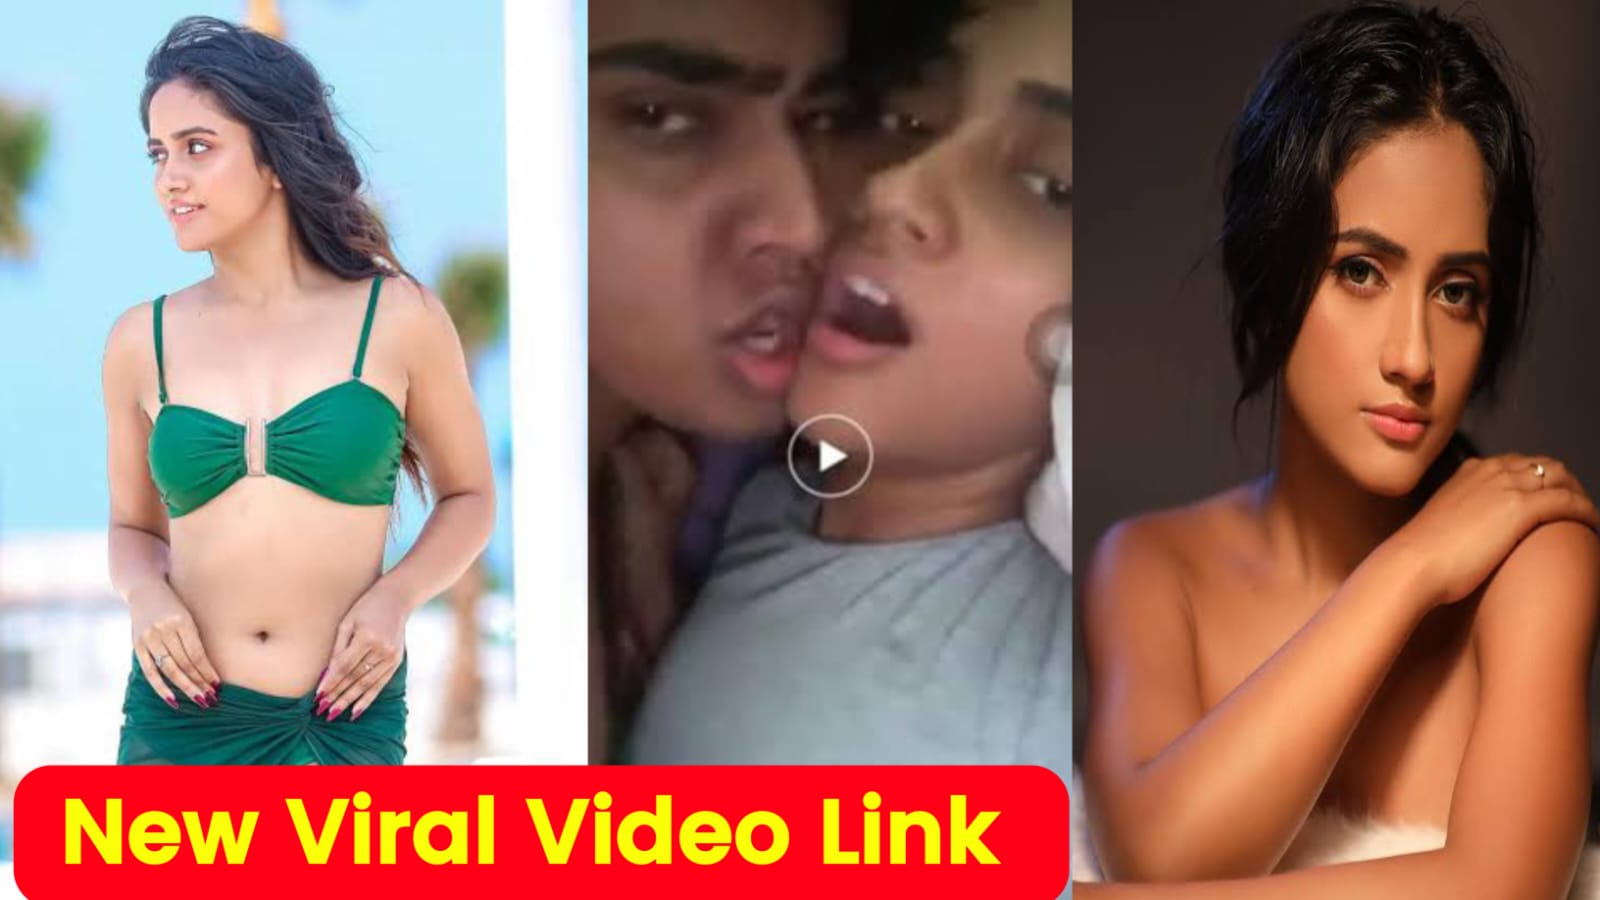 [Watch now] Nisha Guragain Viral Video Link